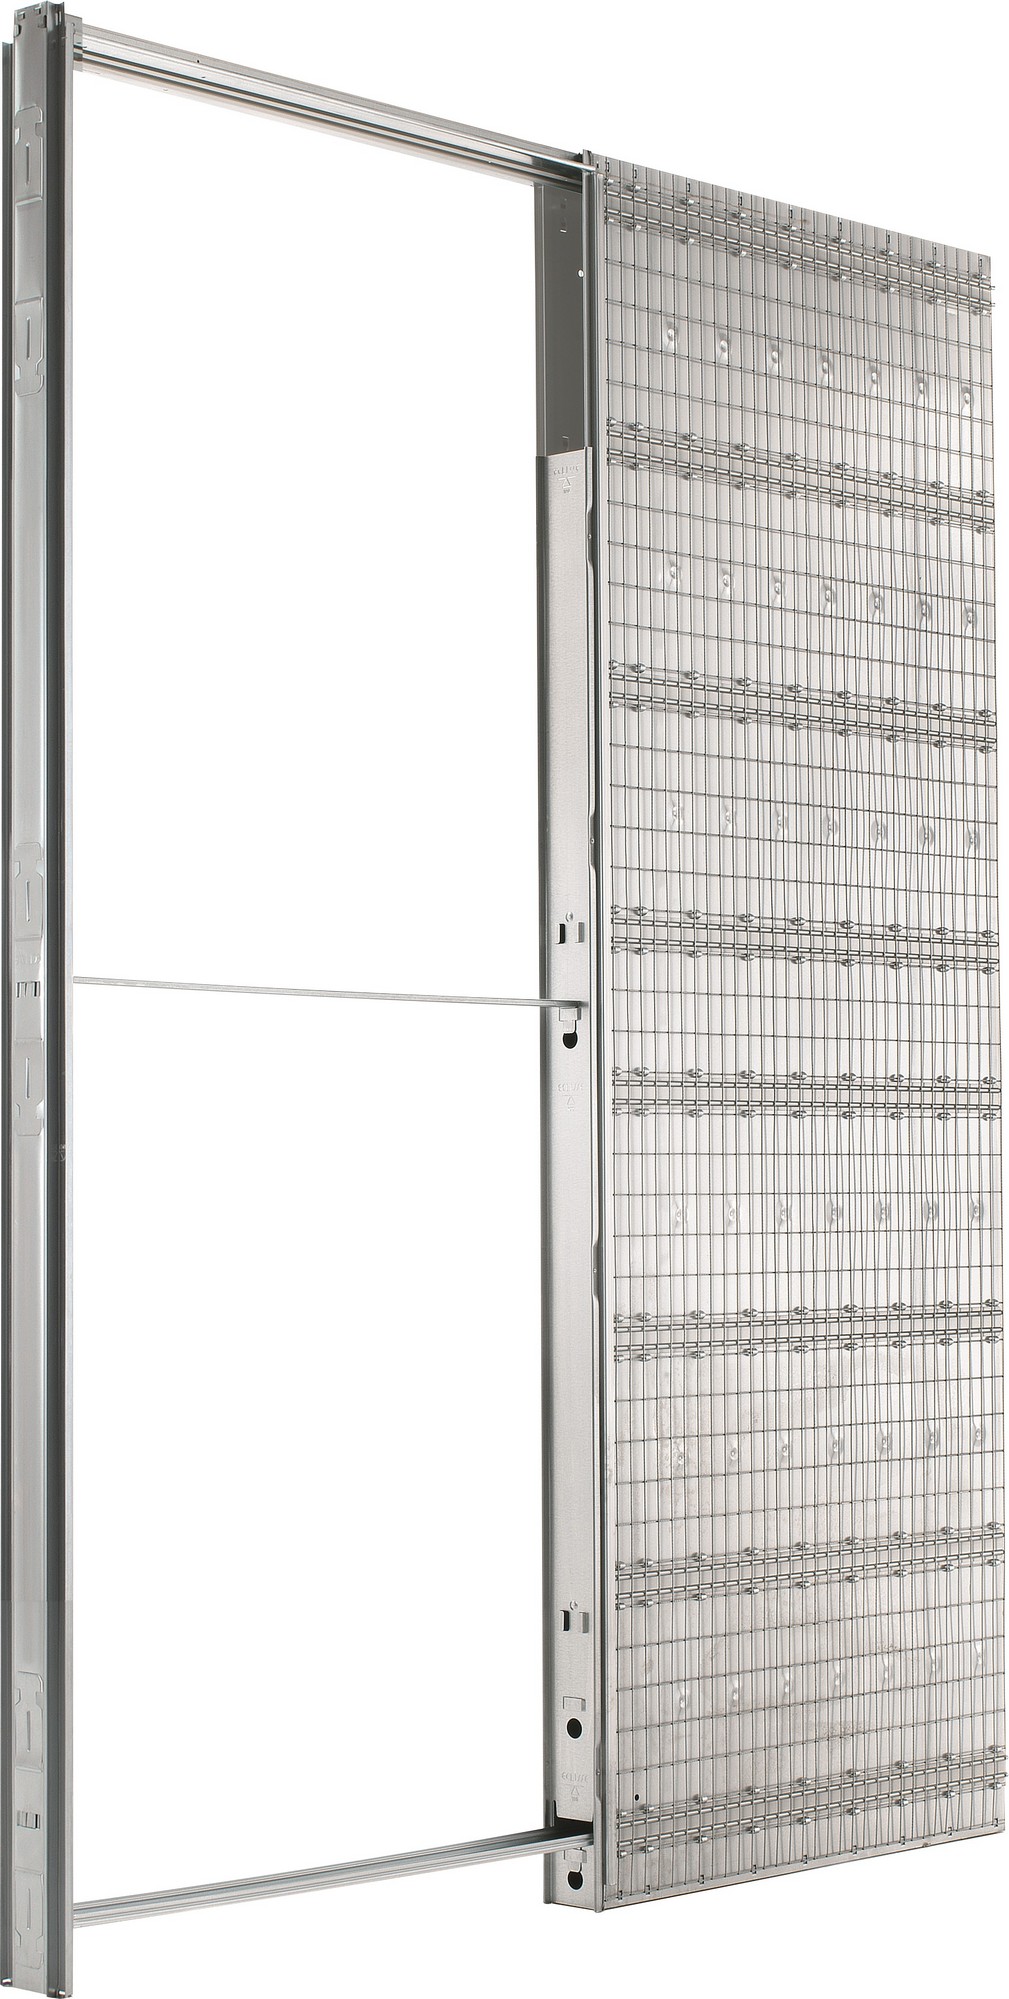 Pouzdro Eclisse Standard 1000/2100 mm do zdiva tl. 108 mm